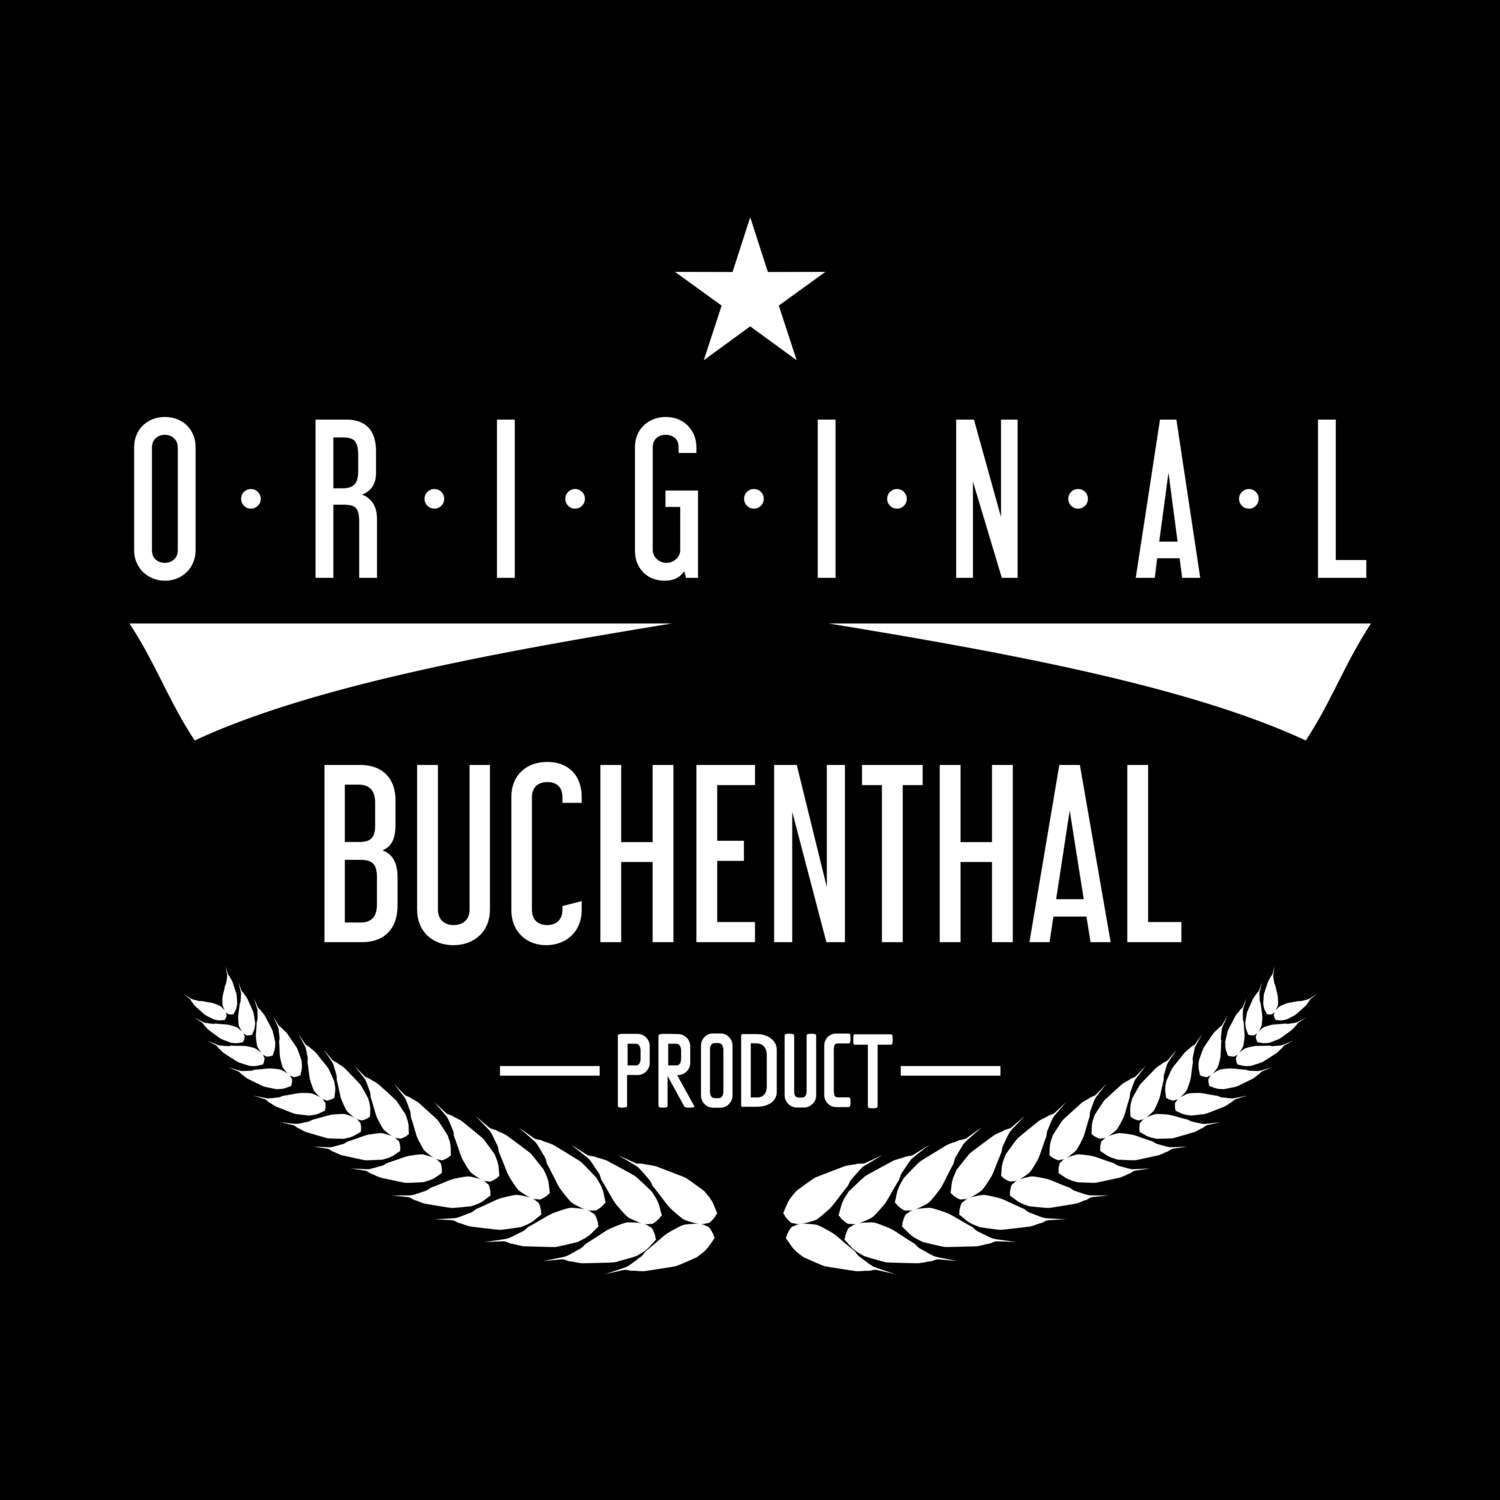 Buchenthal T-Shirt »Original Product«